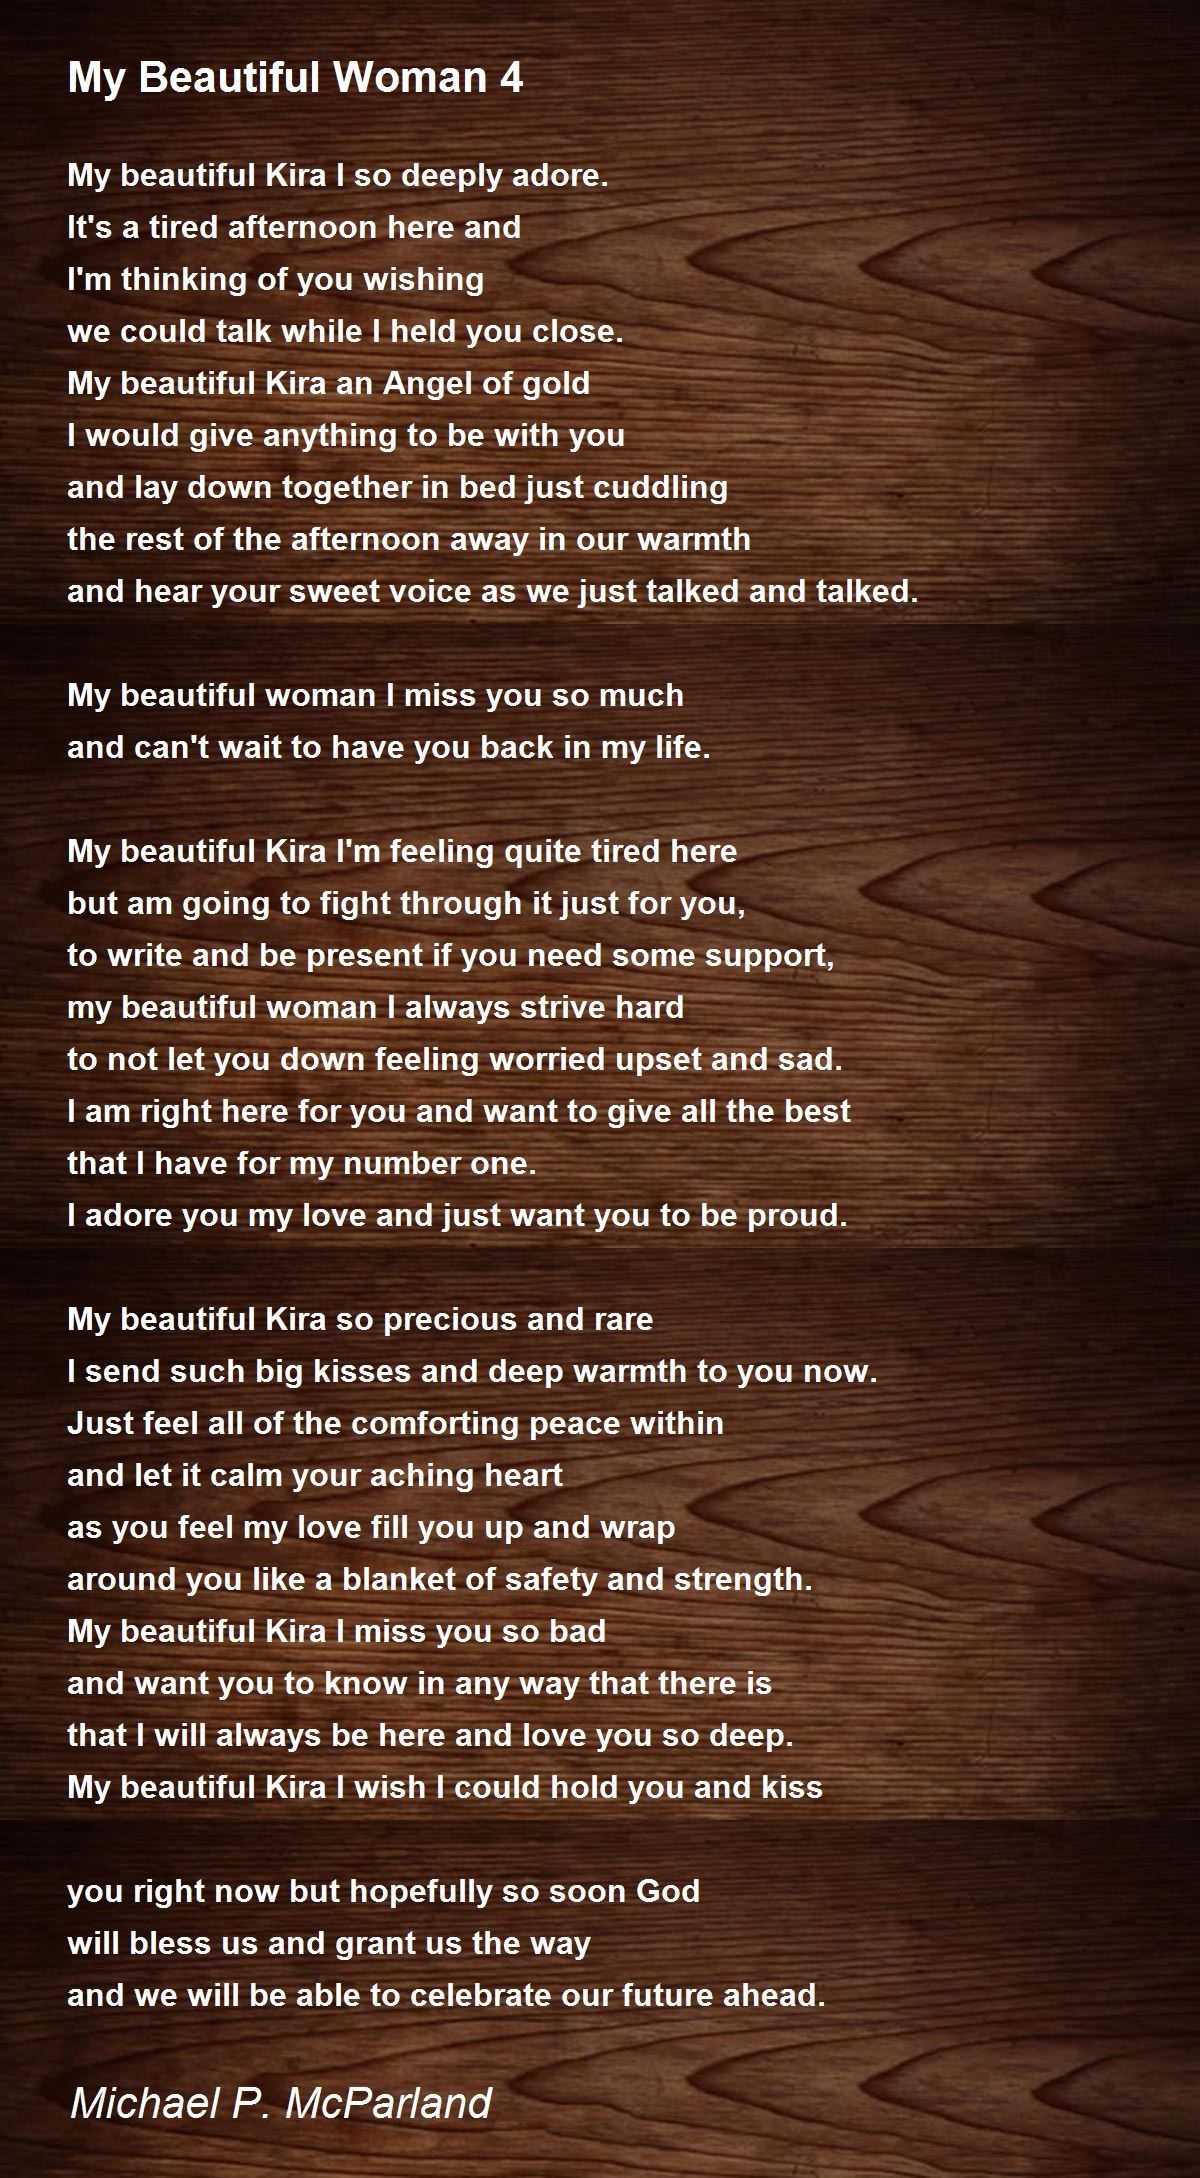 My Beautiful Woman 4 Poem by Michael P. McParland - Poem Hunter